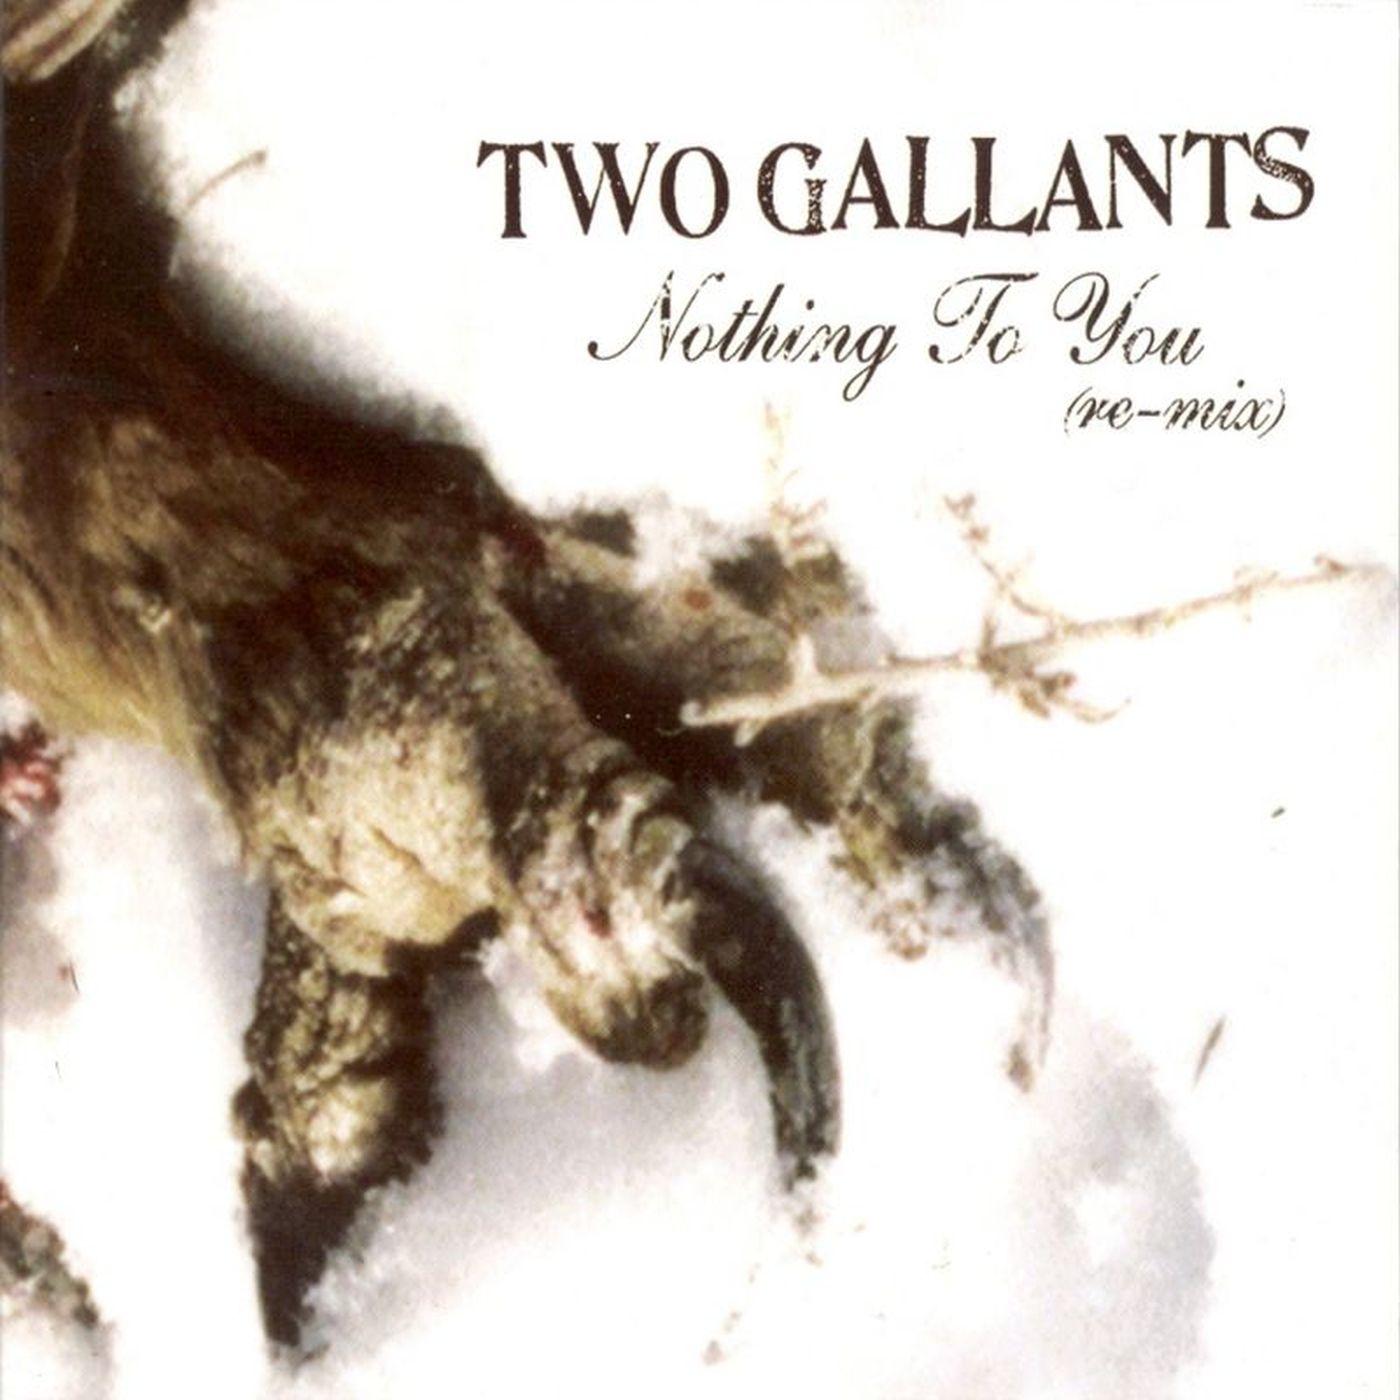 Two Gallants - Fail Hard to Regain (Live)